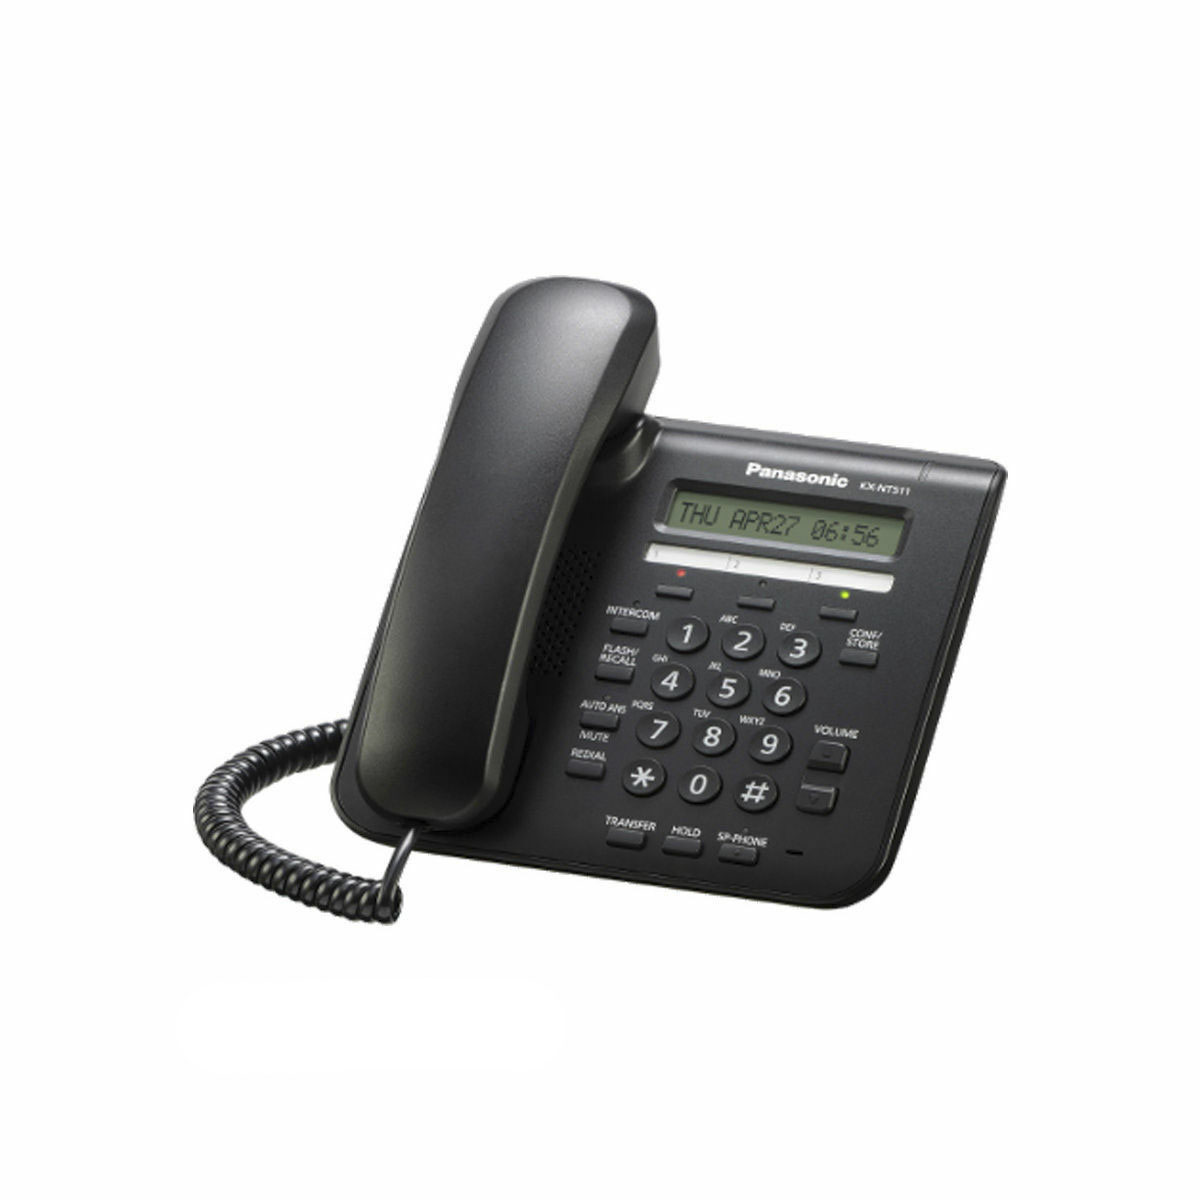  تلفن سانترال پاناسونیک مدل KX-NT511 A ا Panasonic KX-NT511 A Central Telephone